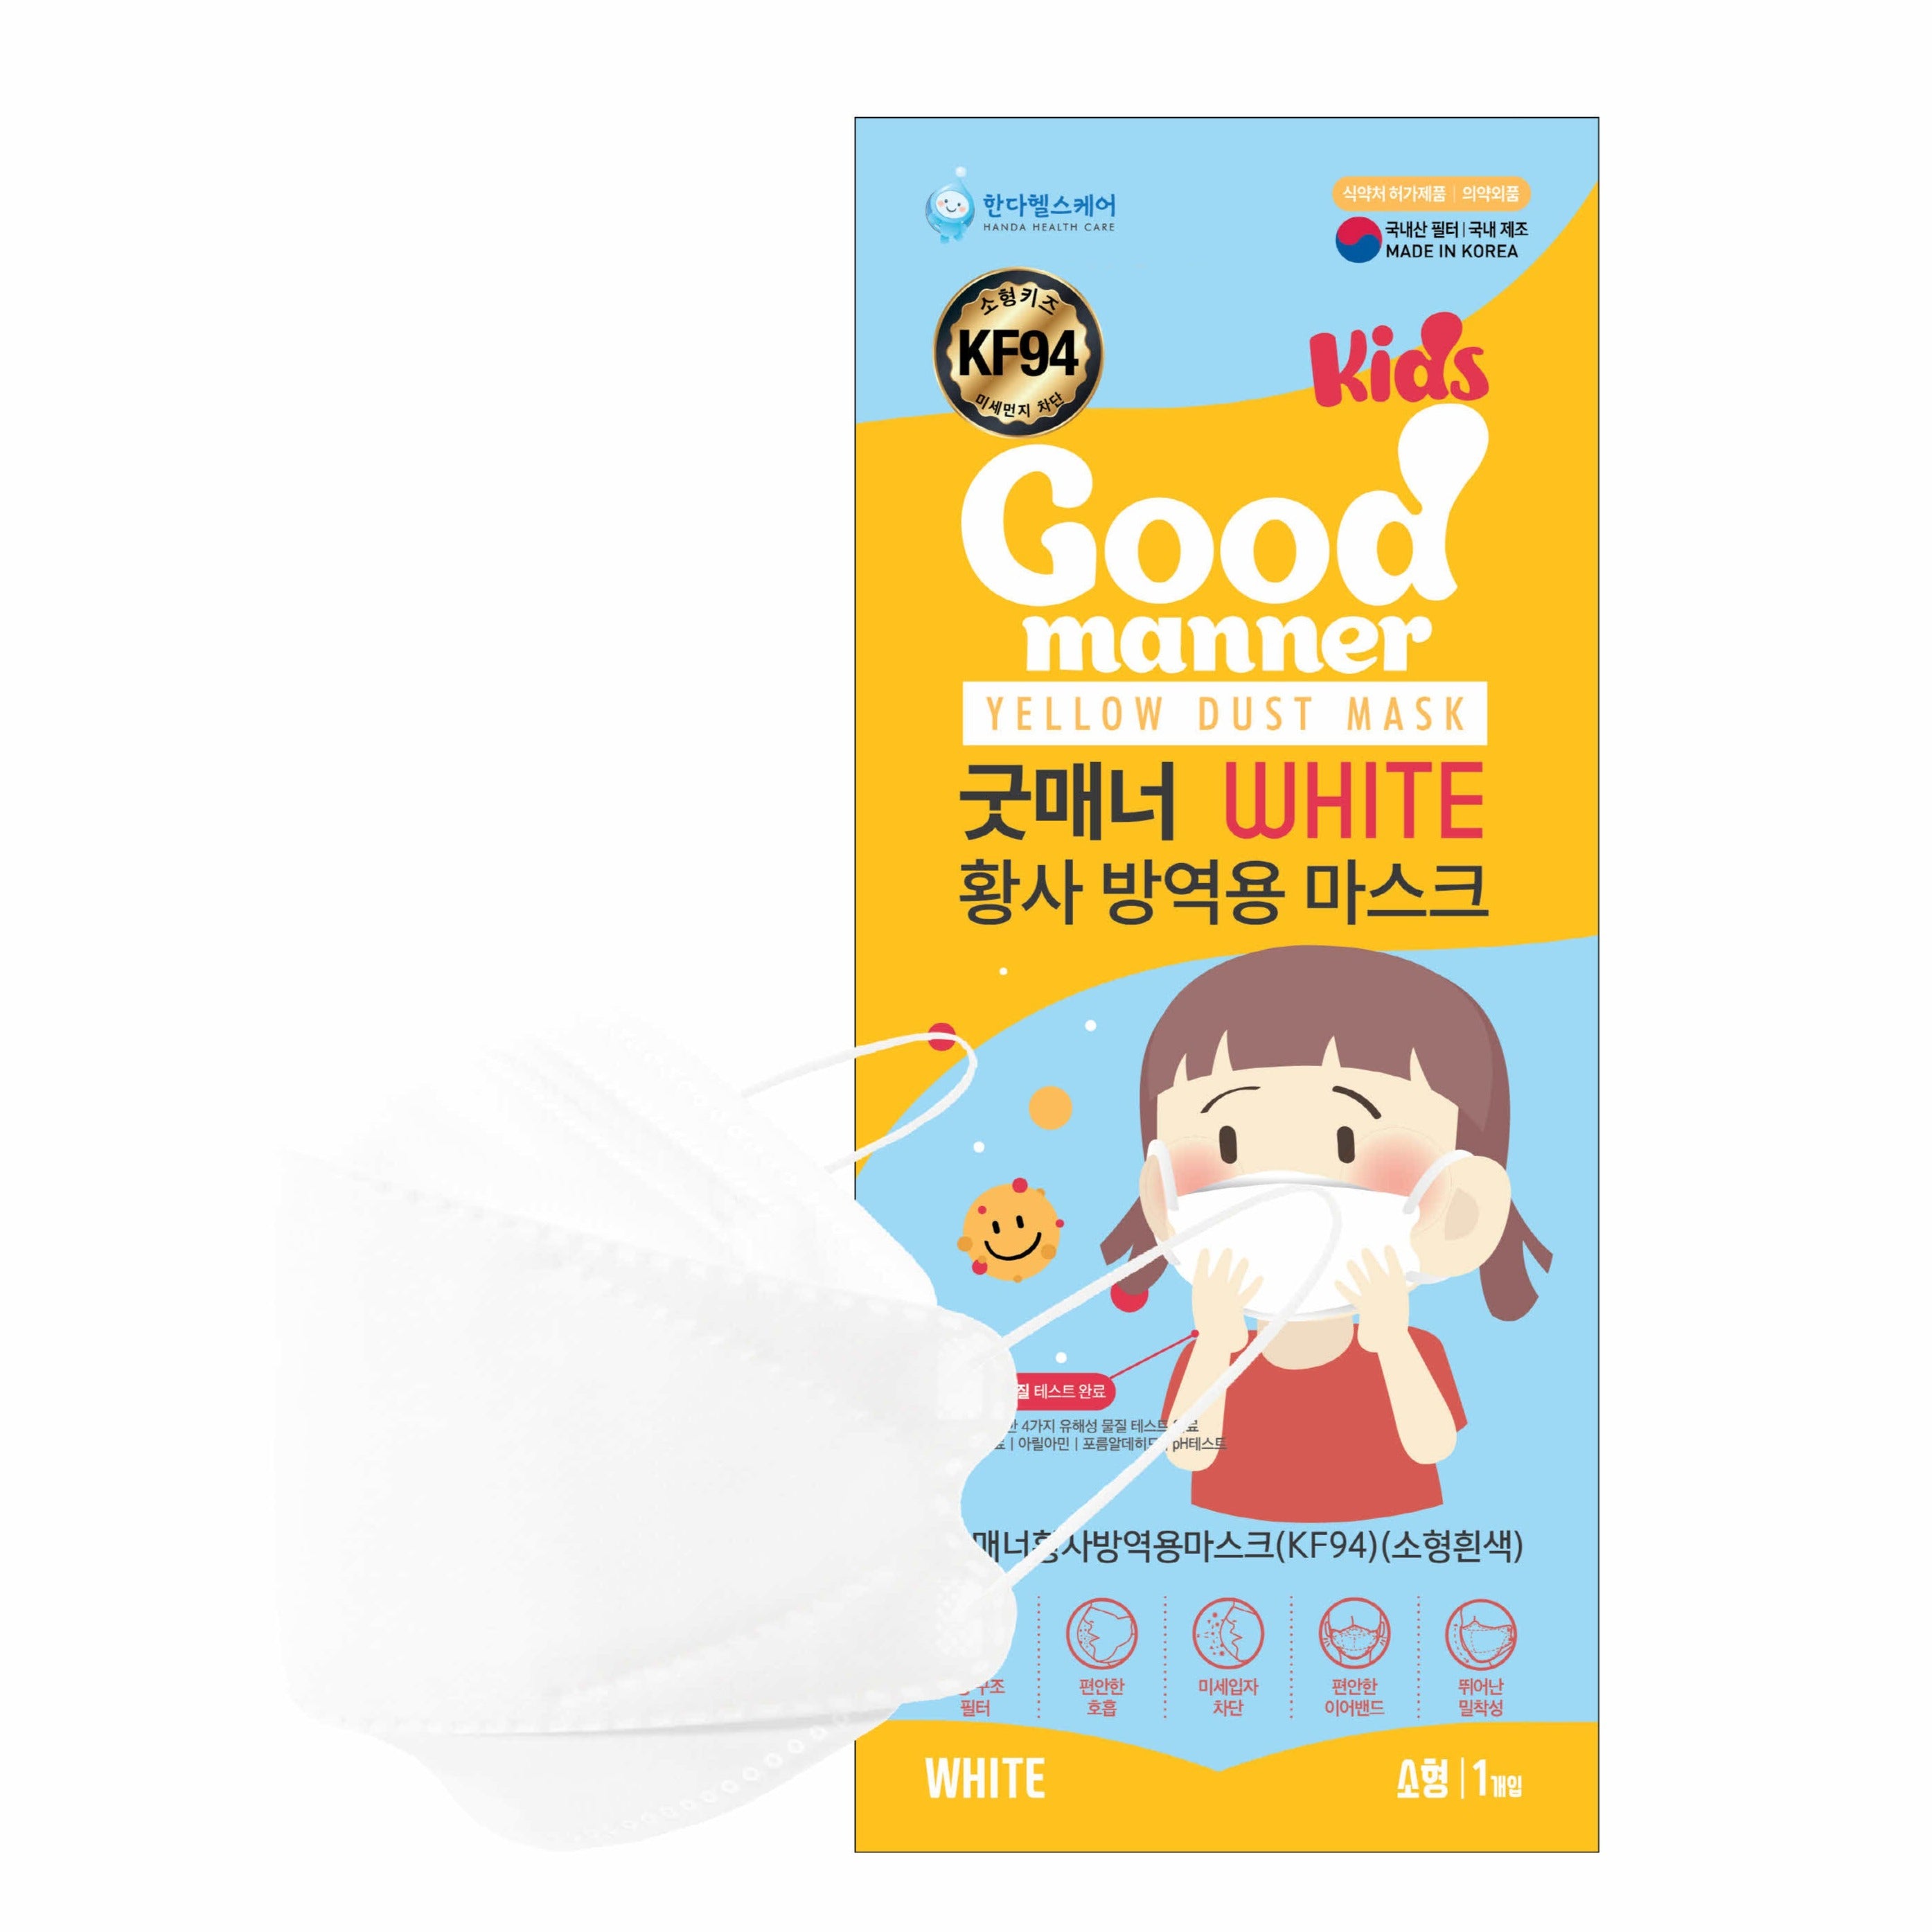 Good Manner - KF94 Mask for Kids